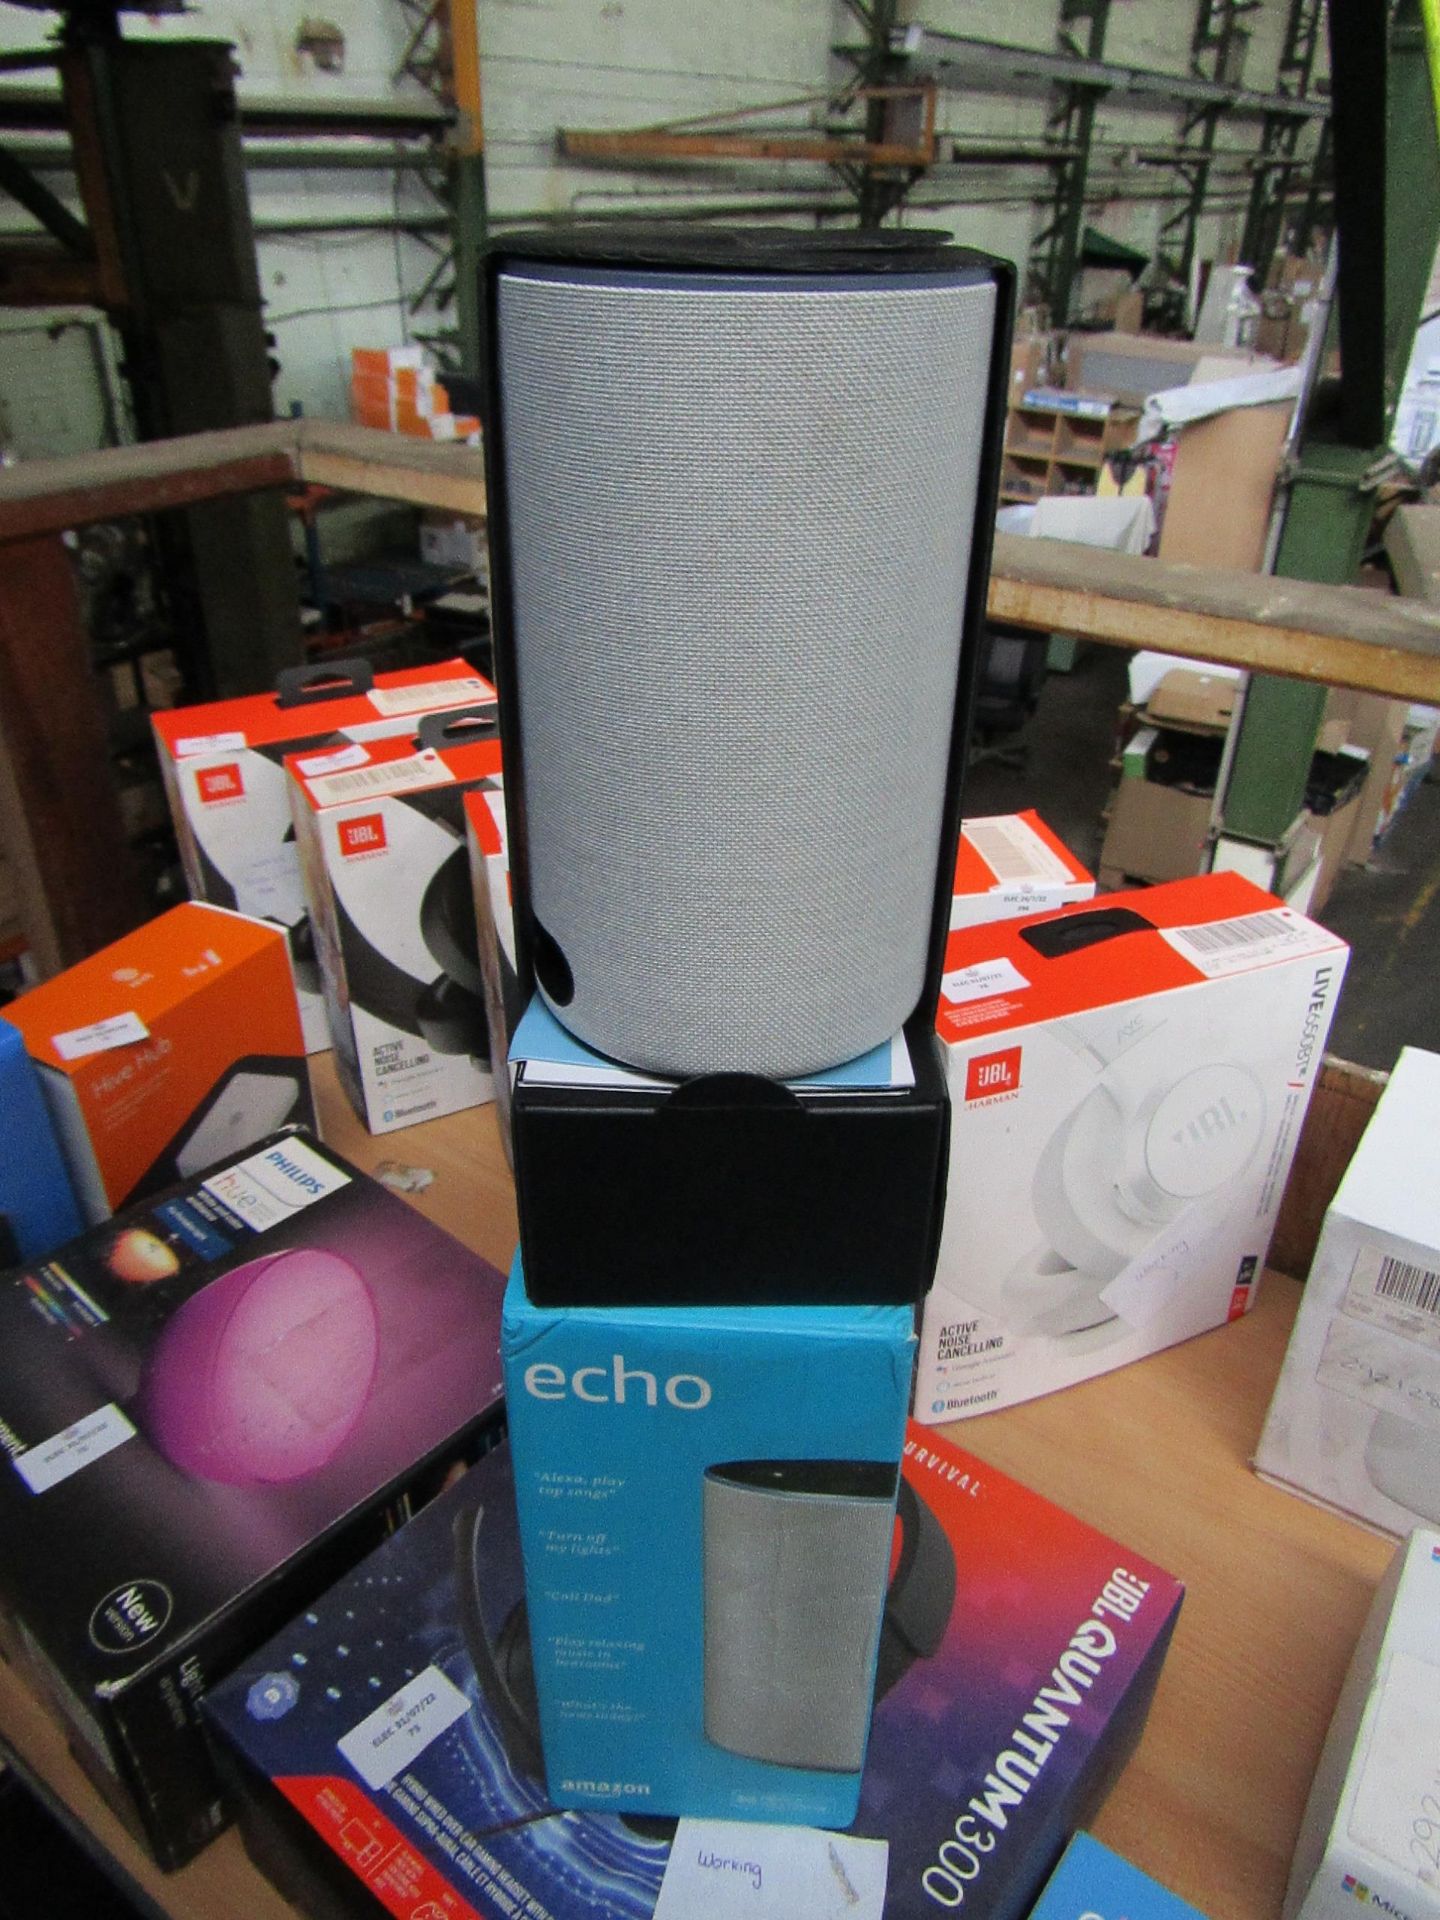 Amazon Echo 2nd gen sandstone smart speaker, unchecked in original box